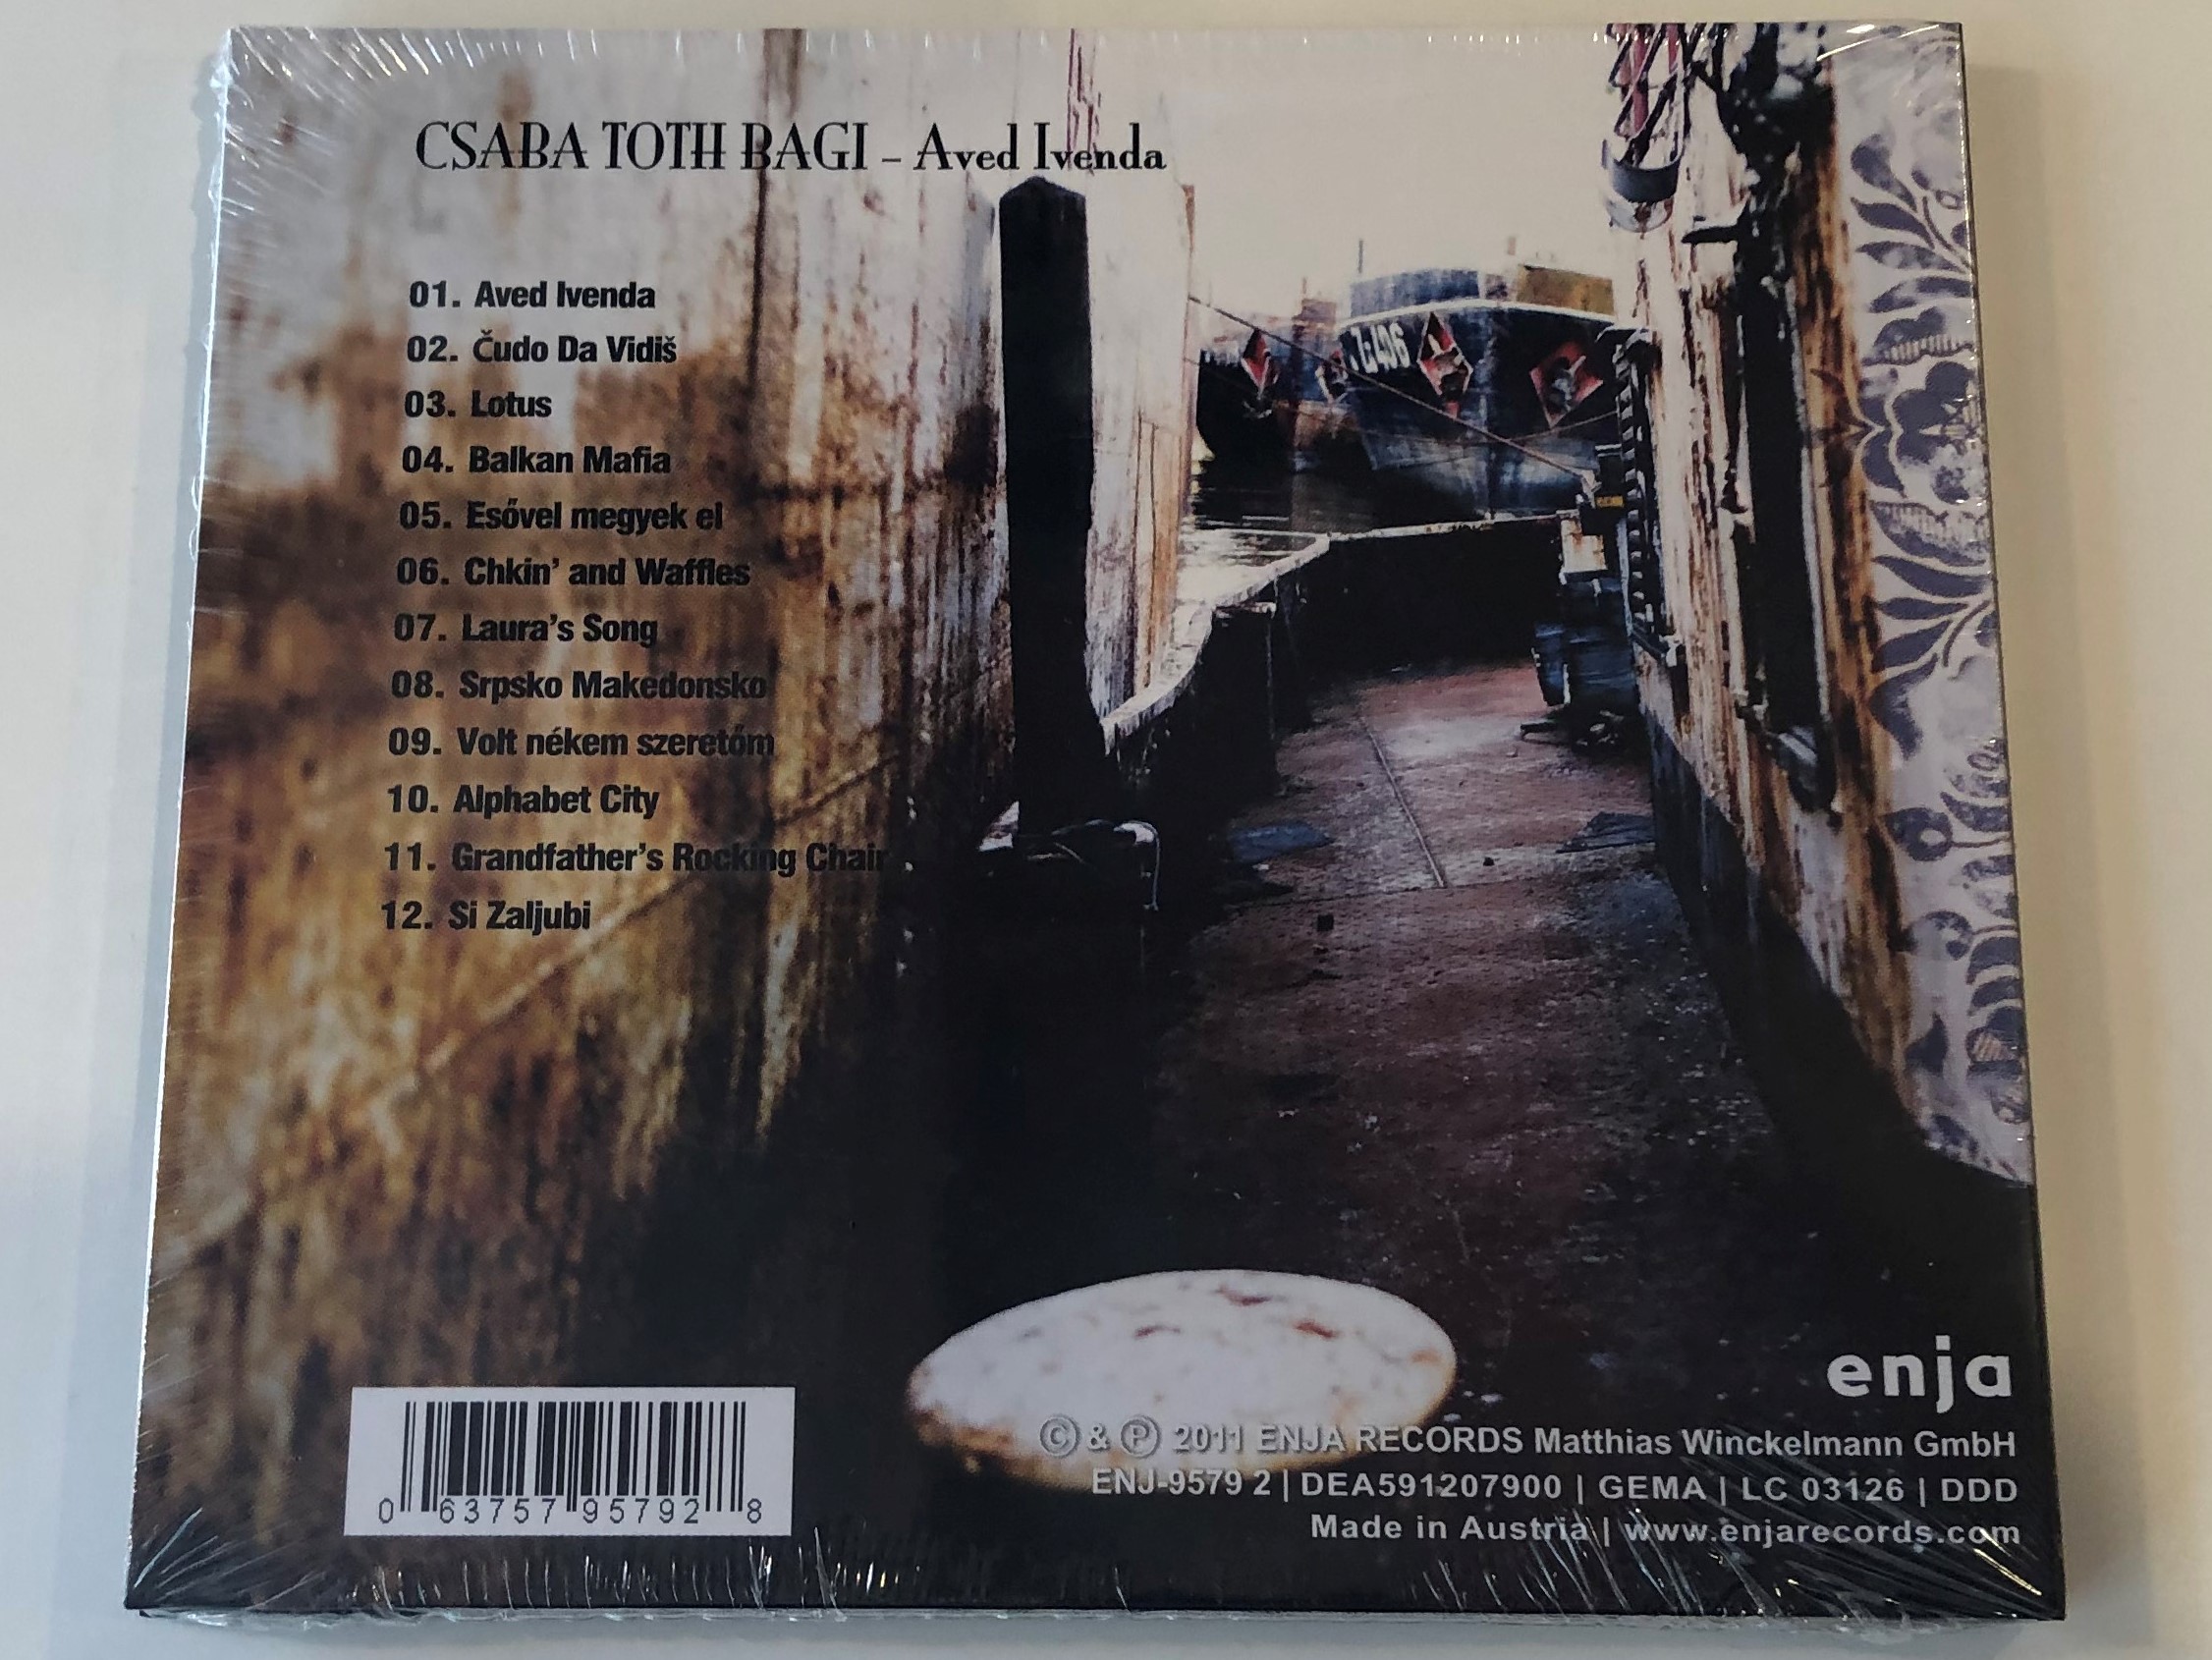 csaba-toth-bagi-aved-ivenda-feat.-al-di-meola-dave-wecki-enja-records-audio-cd-2011-enj-9579-2-2-.jpg